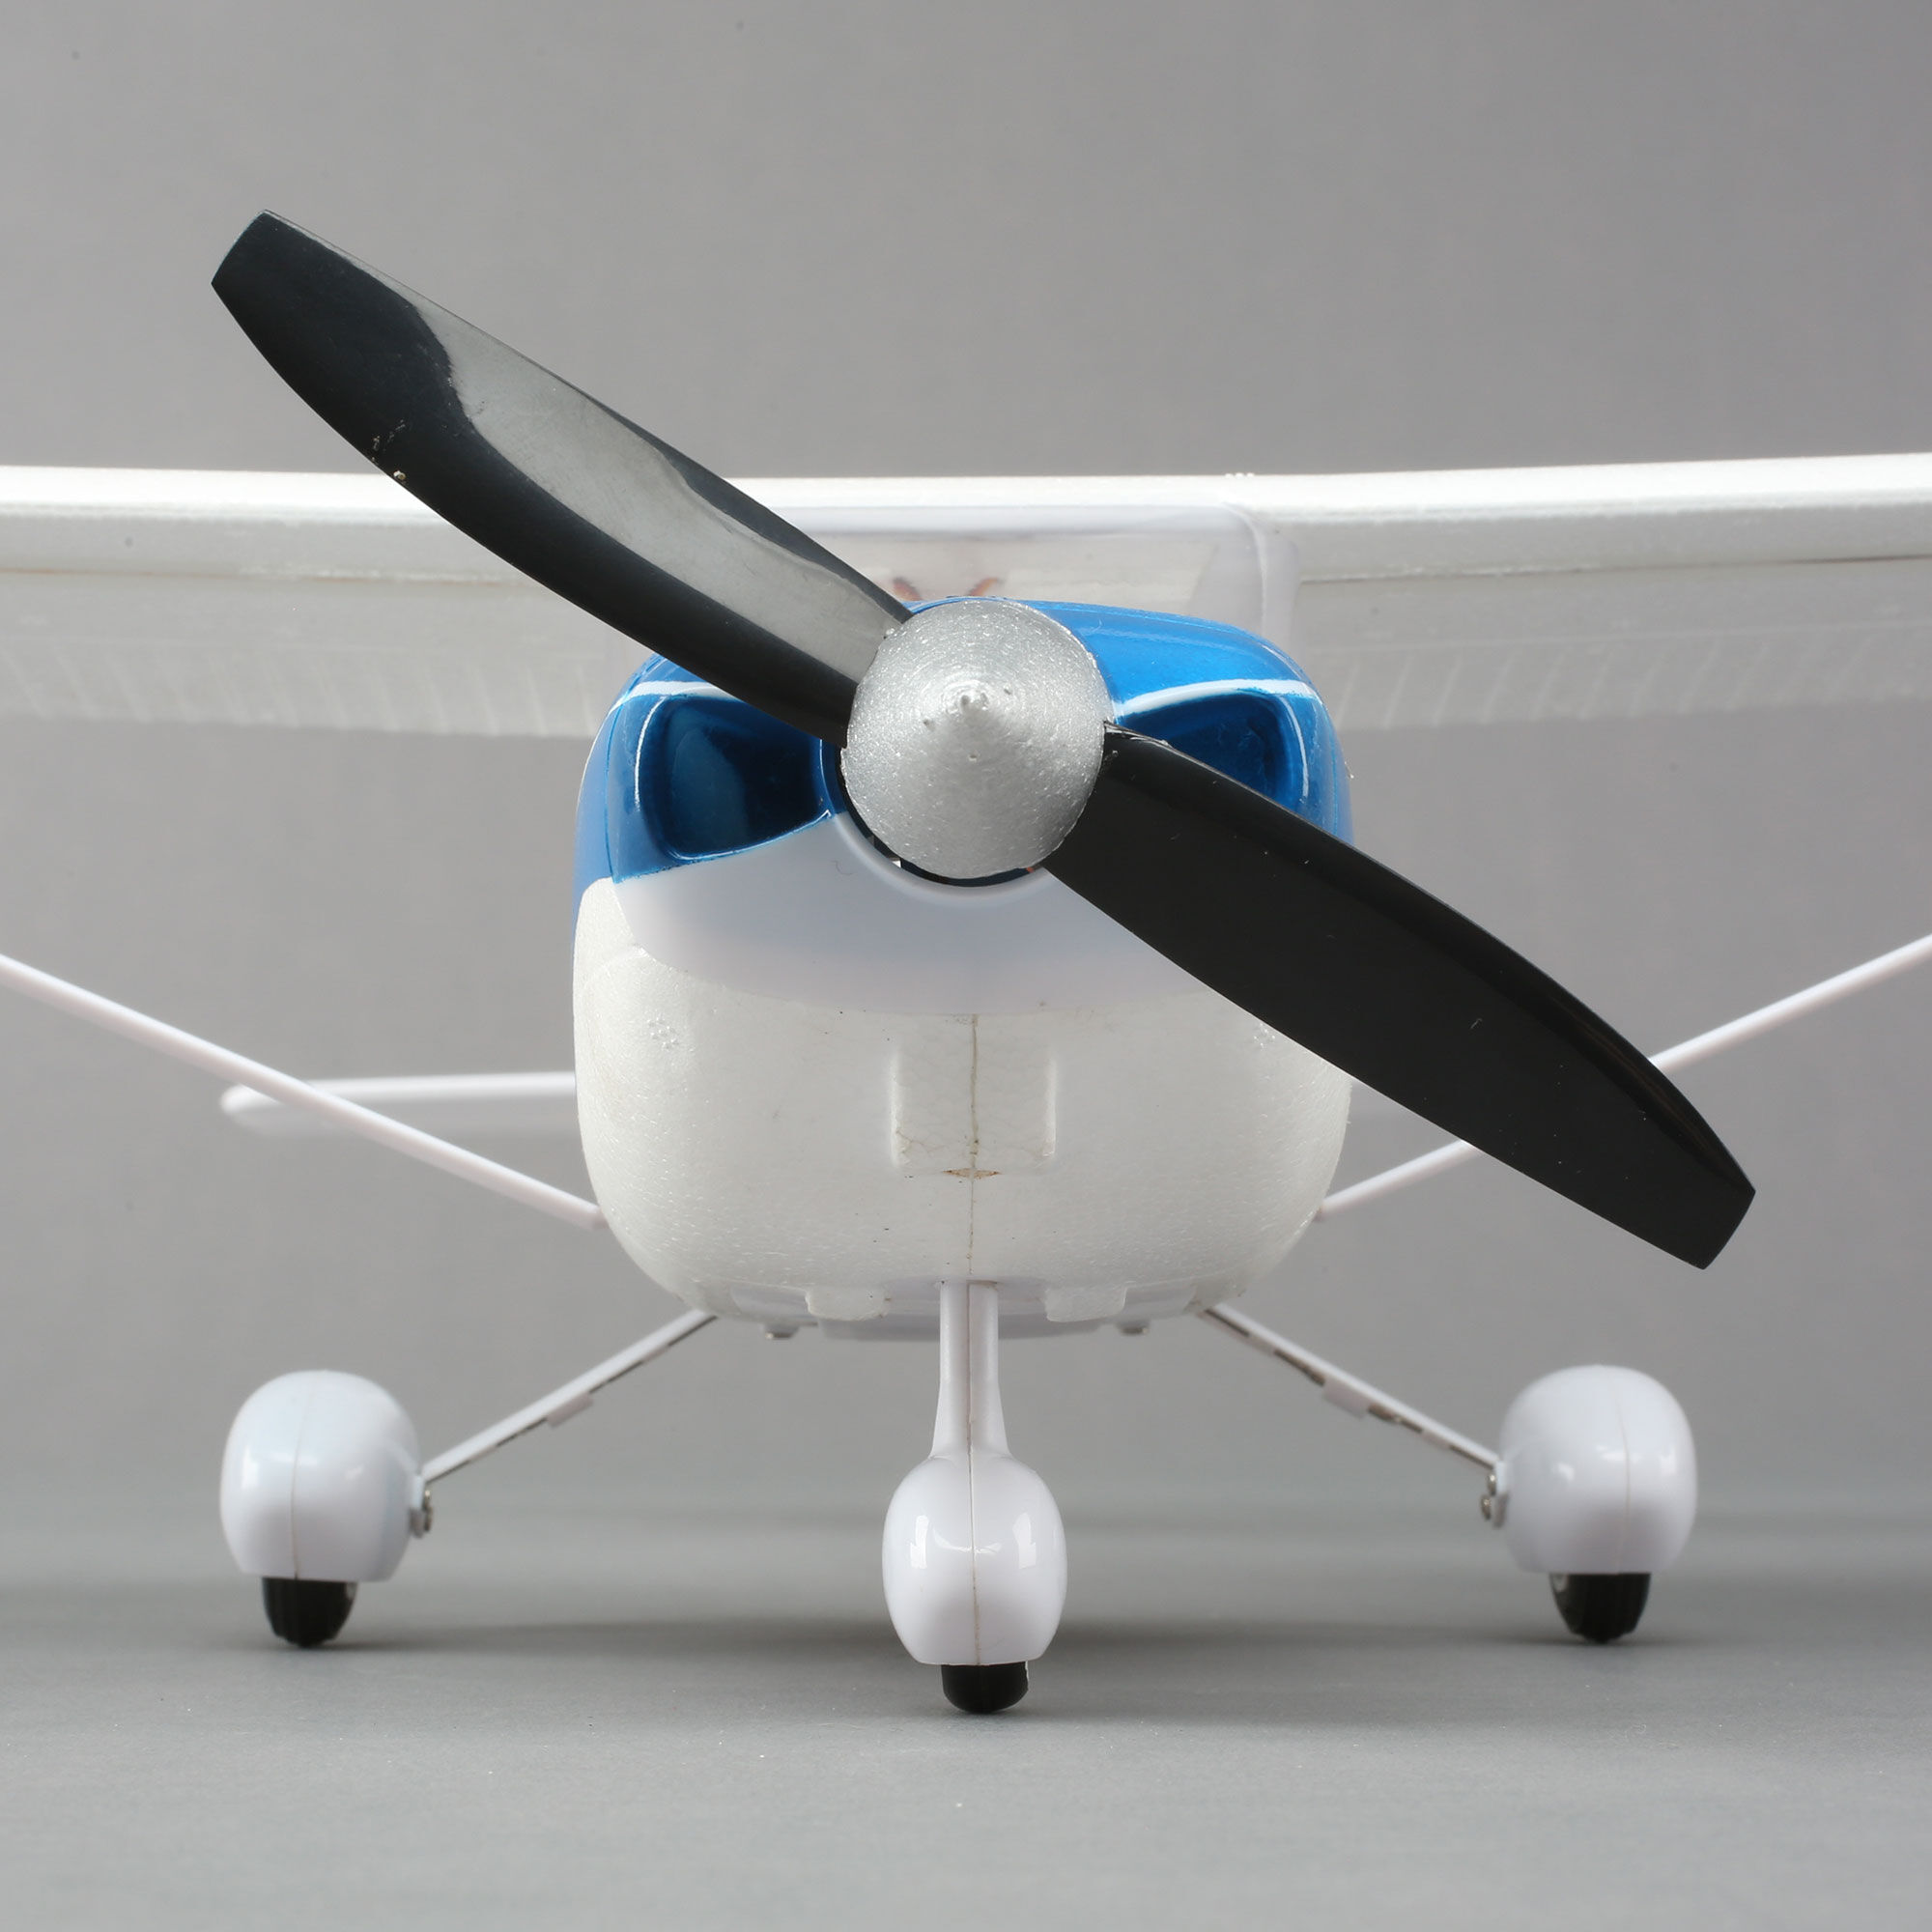 E-flite UMX Cessna 182 BNF Basic with AS3X, 635mm | Horizon Hobby